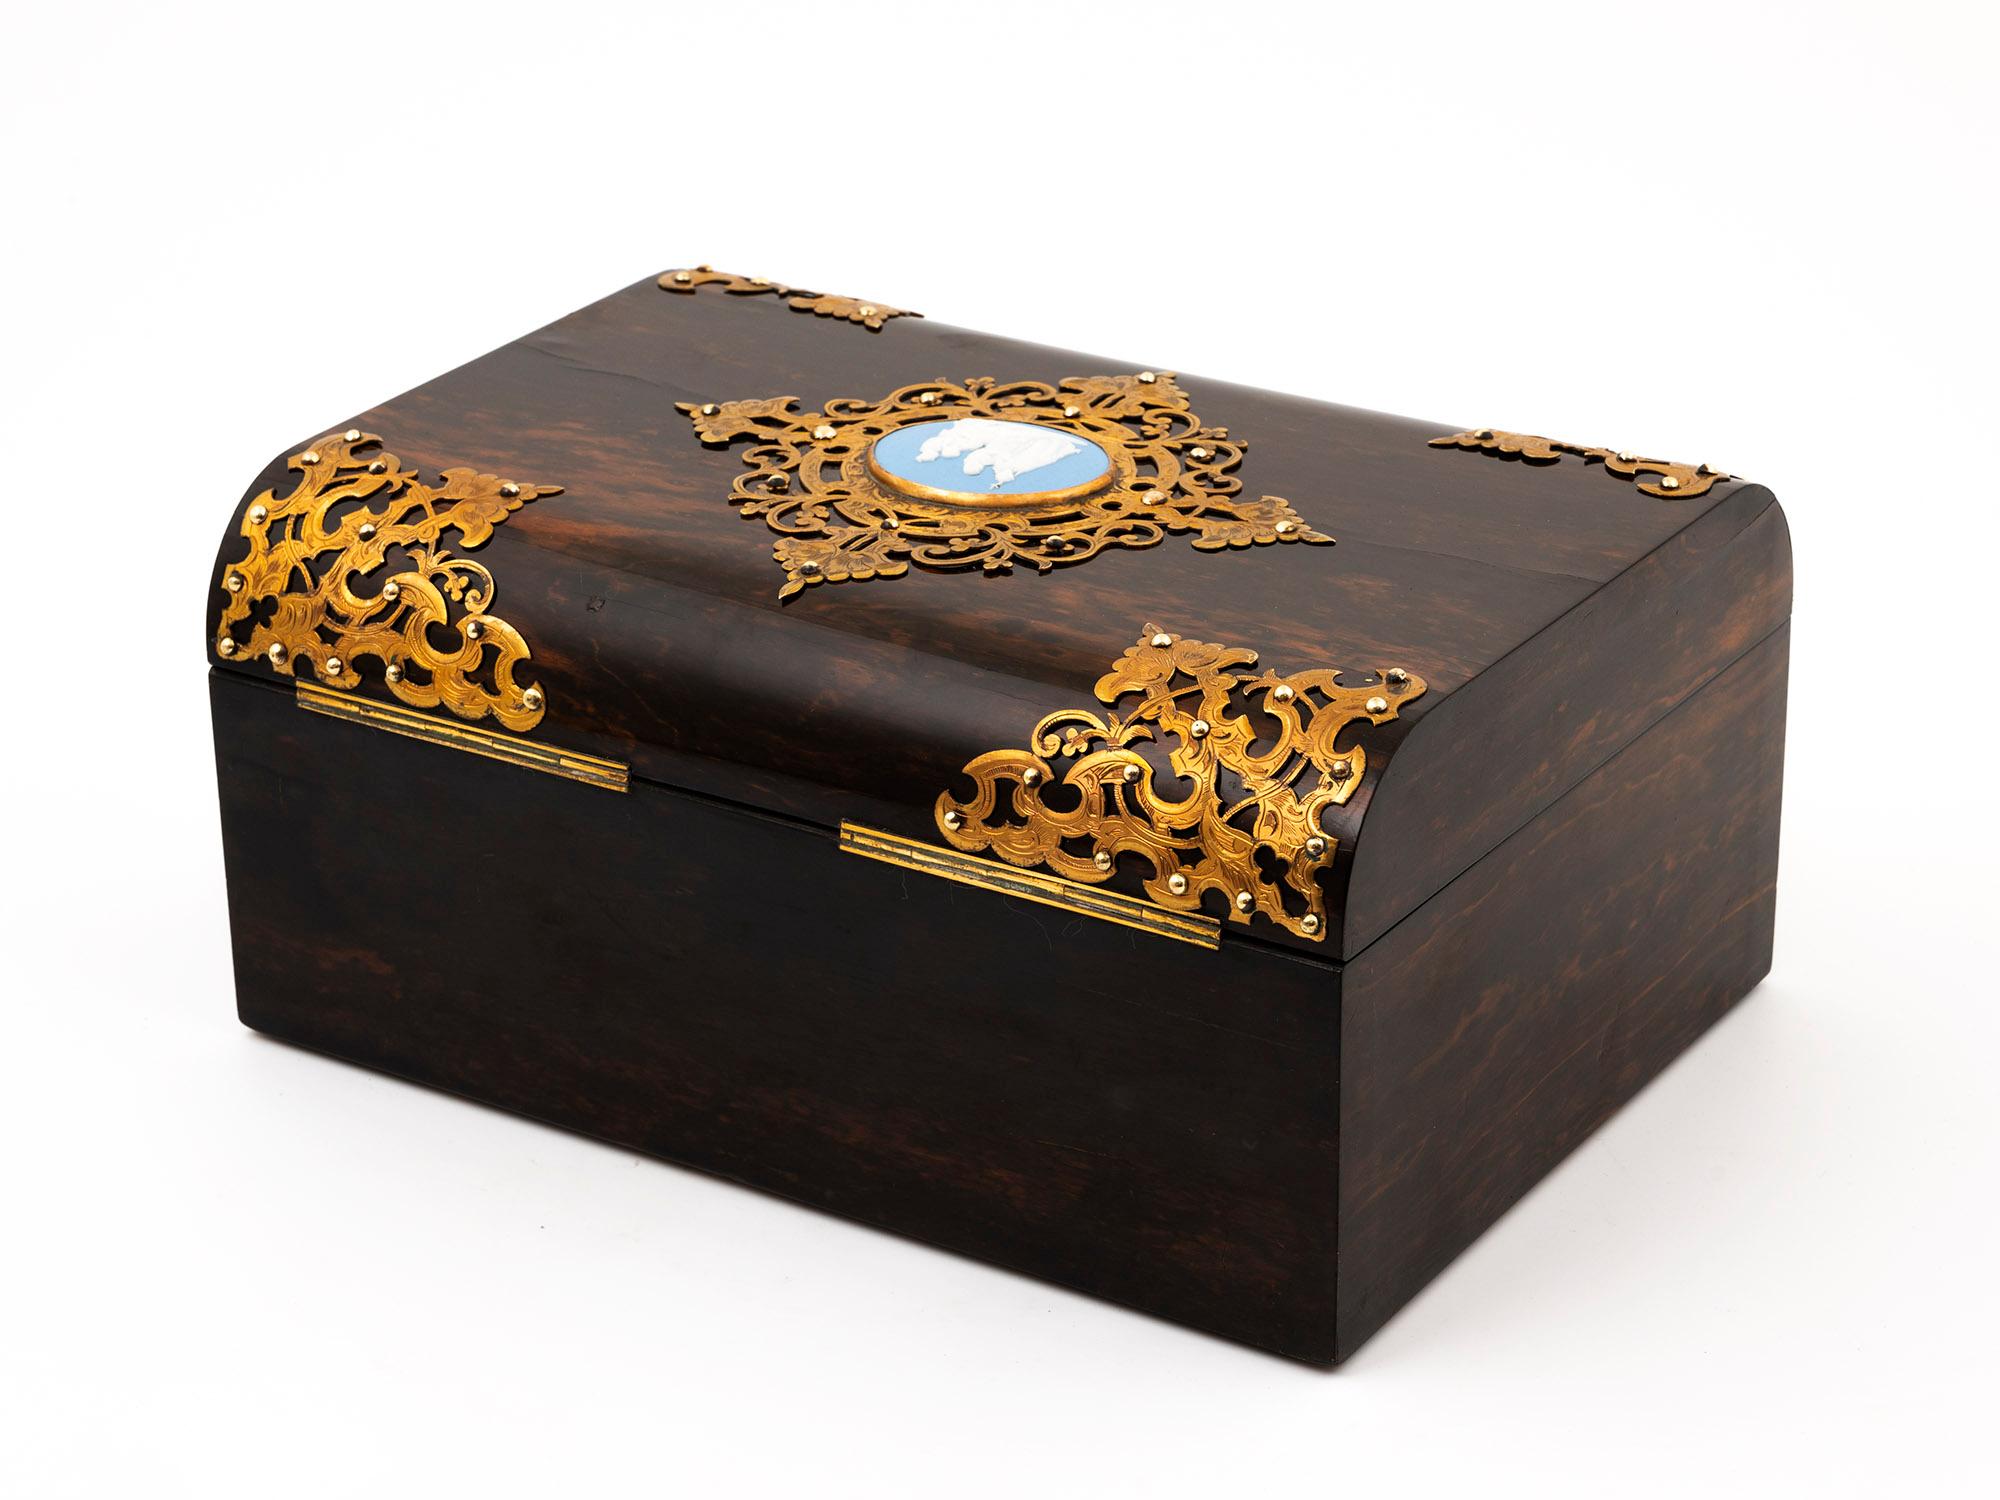 Organic Material Coromandel Dome-Topped Antique Jewellery Box with Wedgwood Jasperware Plaque